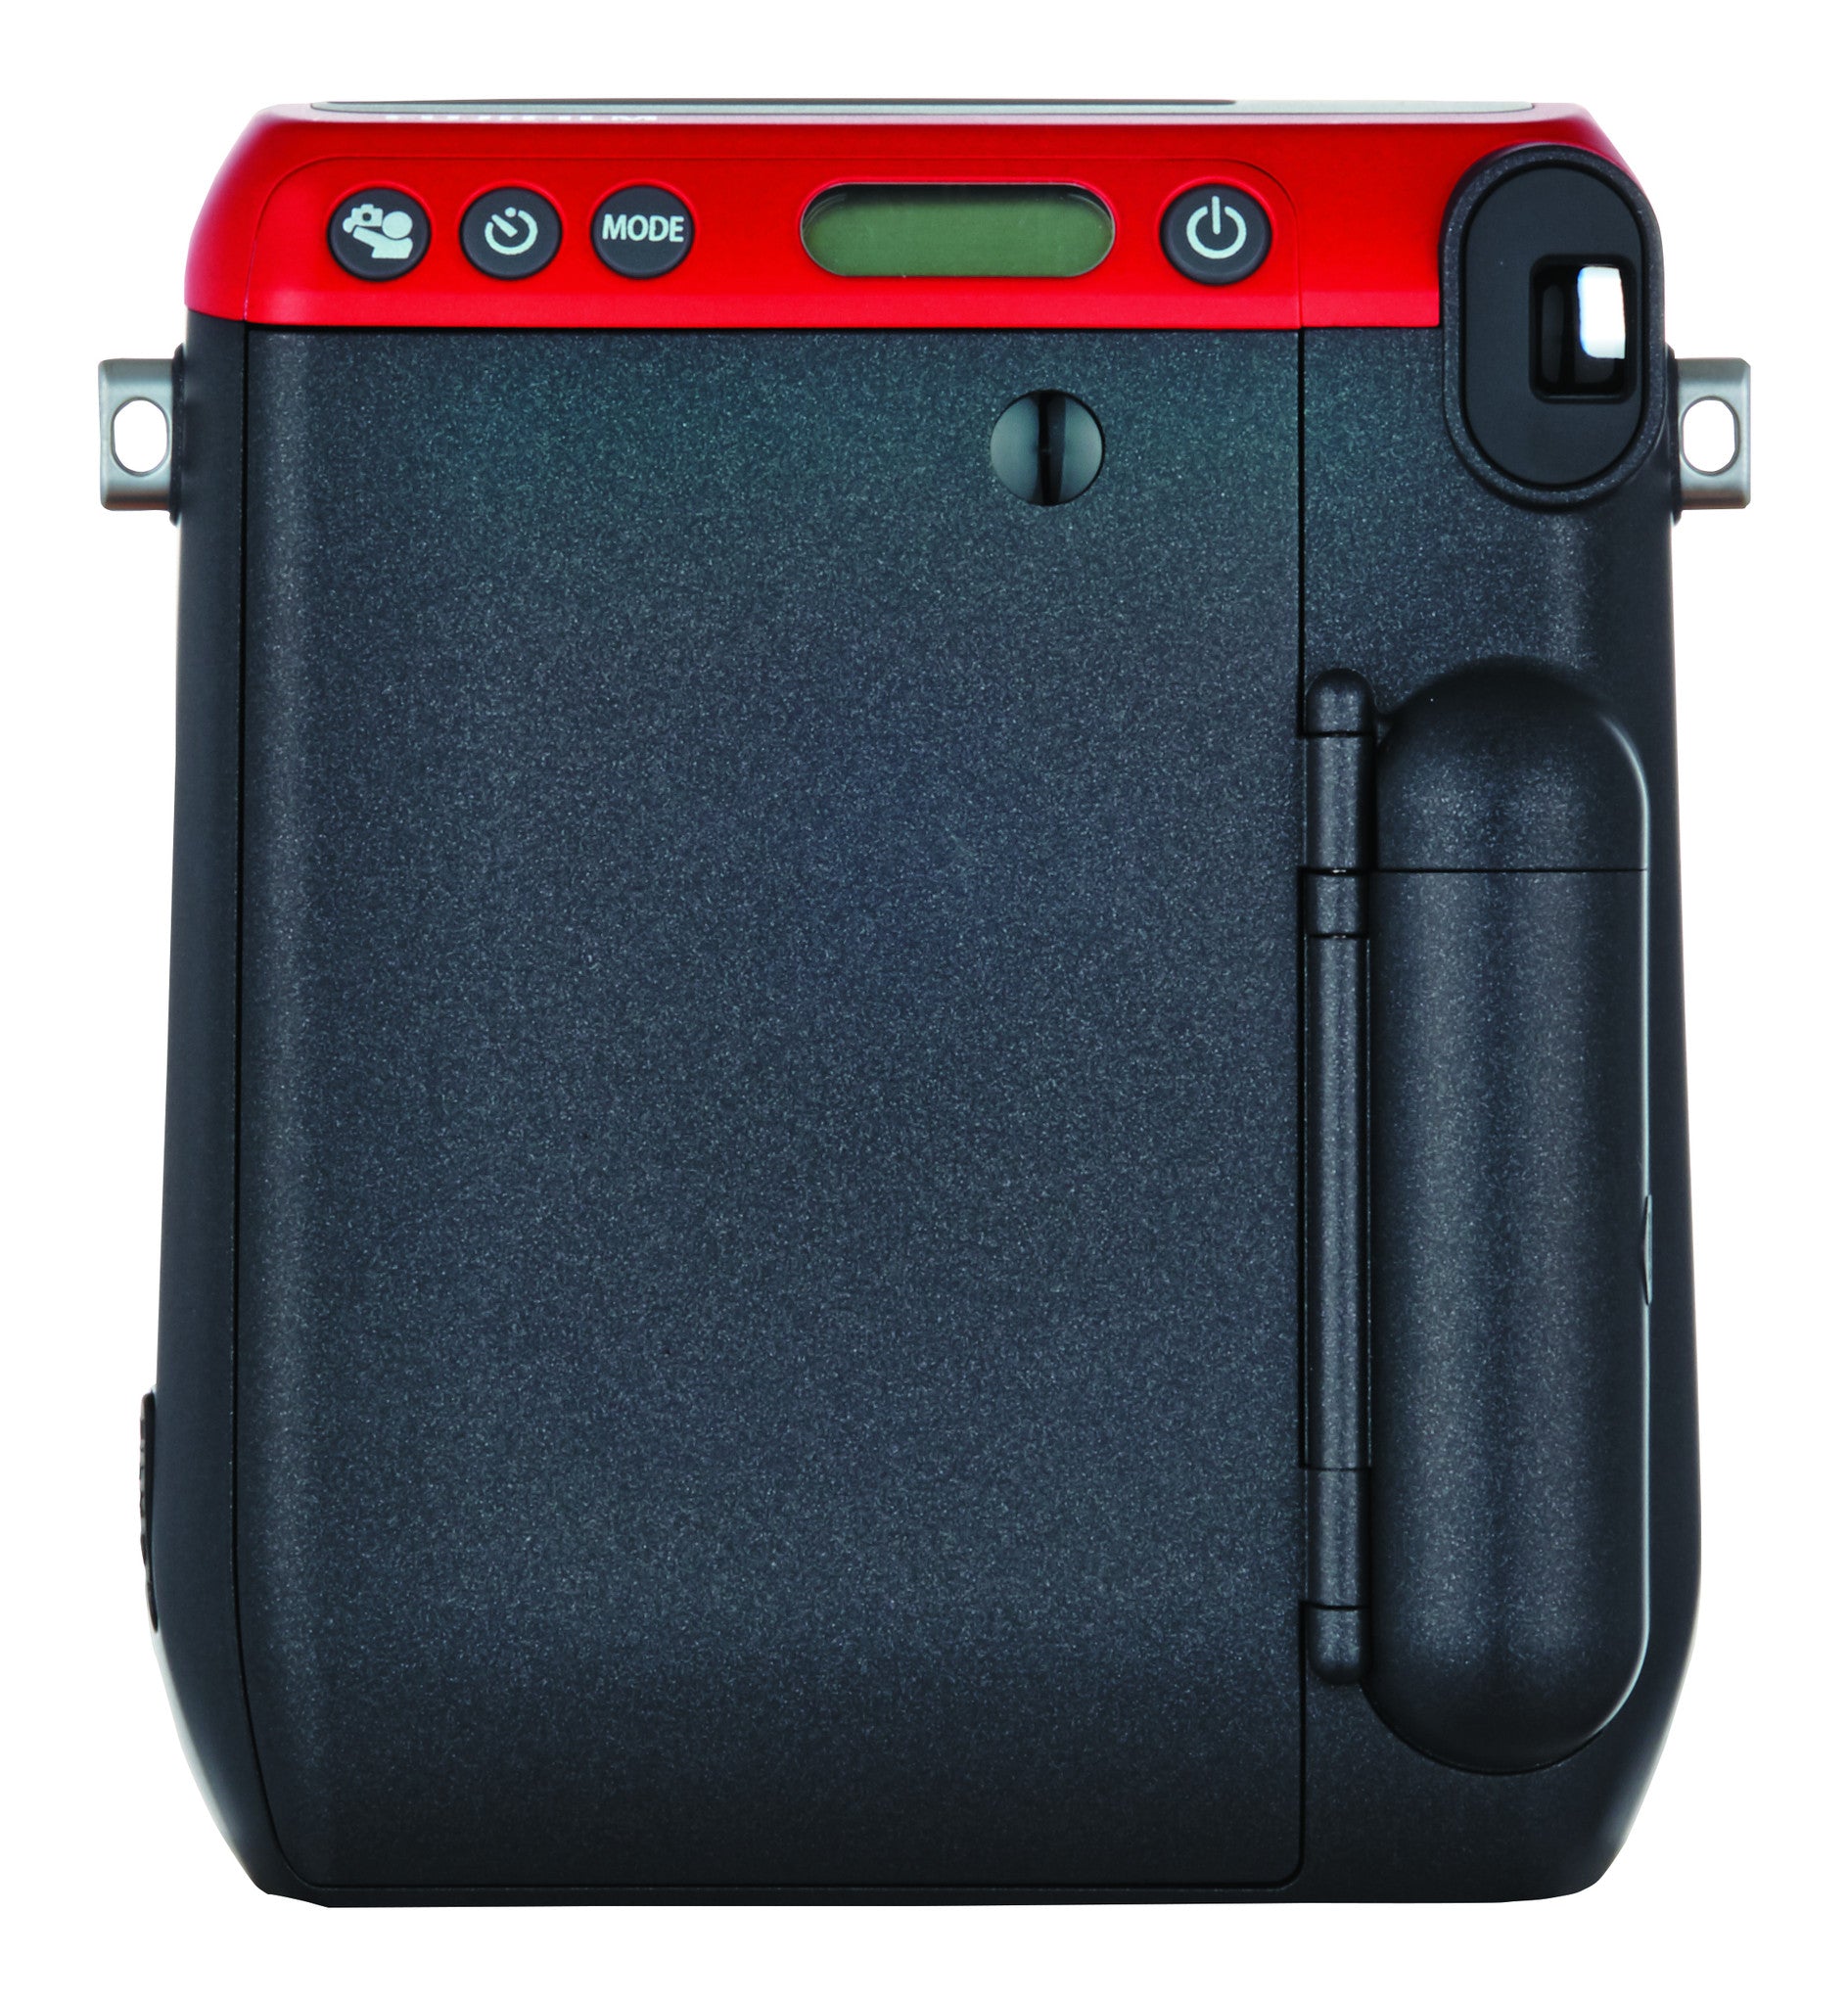 Fujifilm INSTAX Mini 70 Instant Film Camera (Passion Red), camera film cameras, Fujifilm - Pictureline  - 2